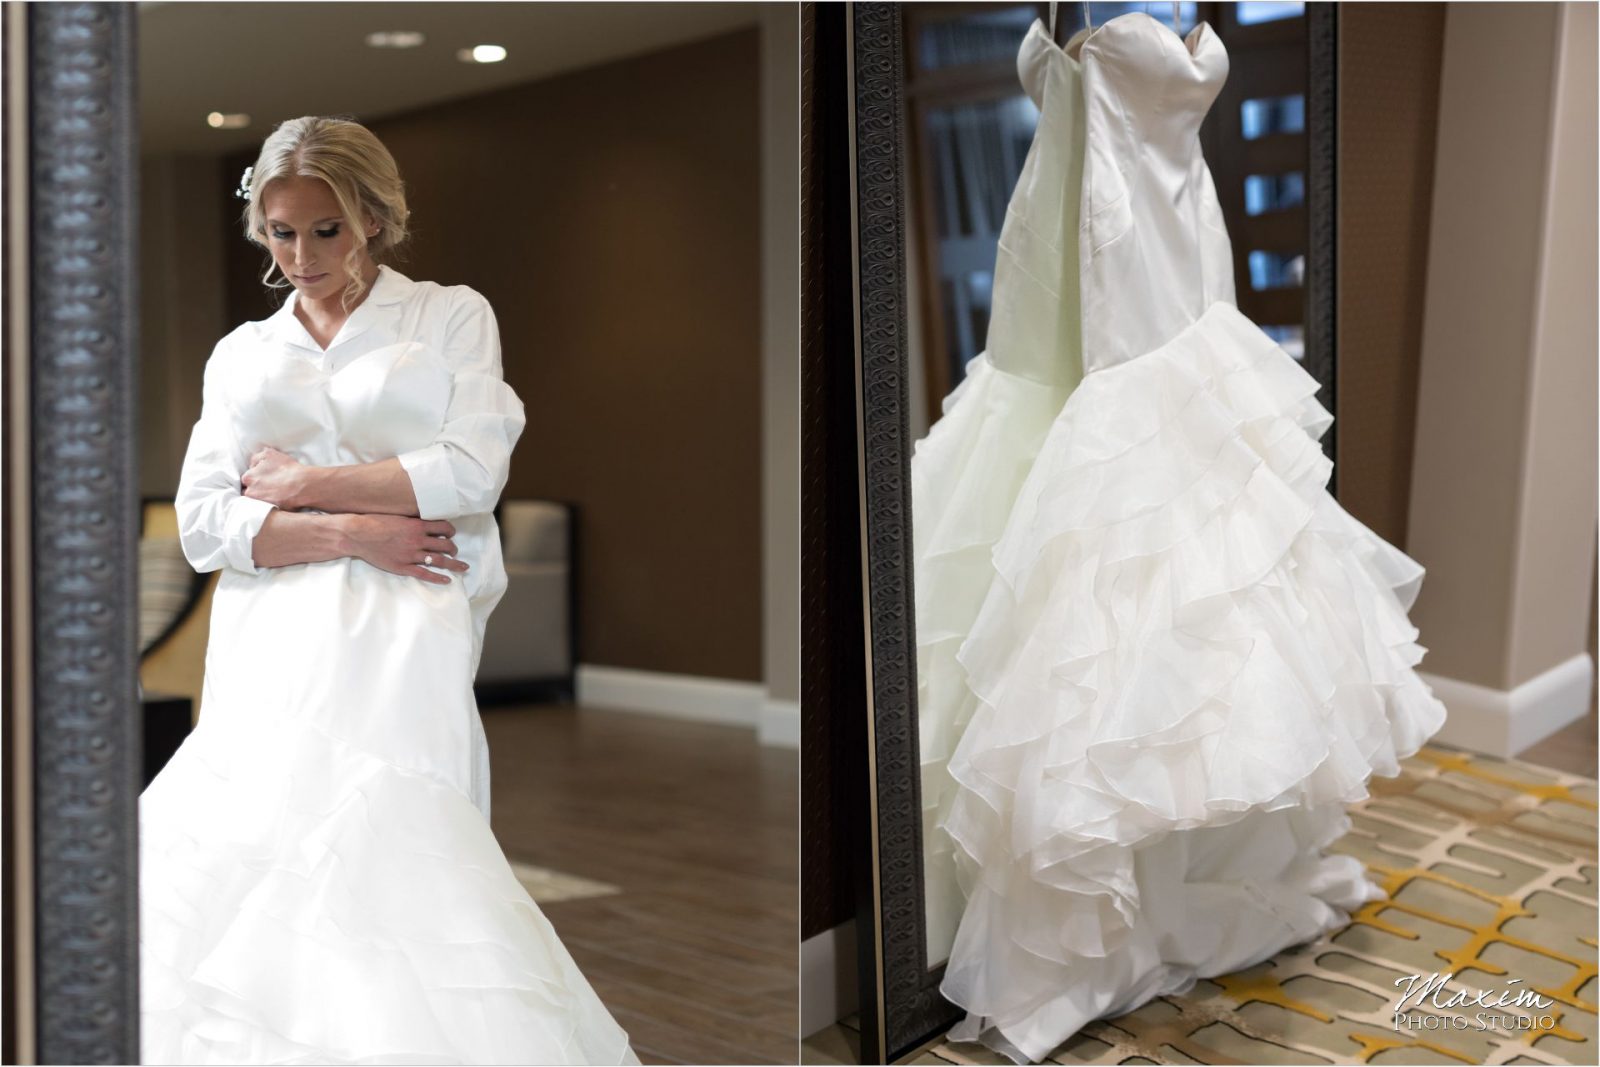 Phoenix Cincinnati Wedding dress bride